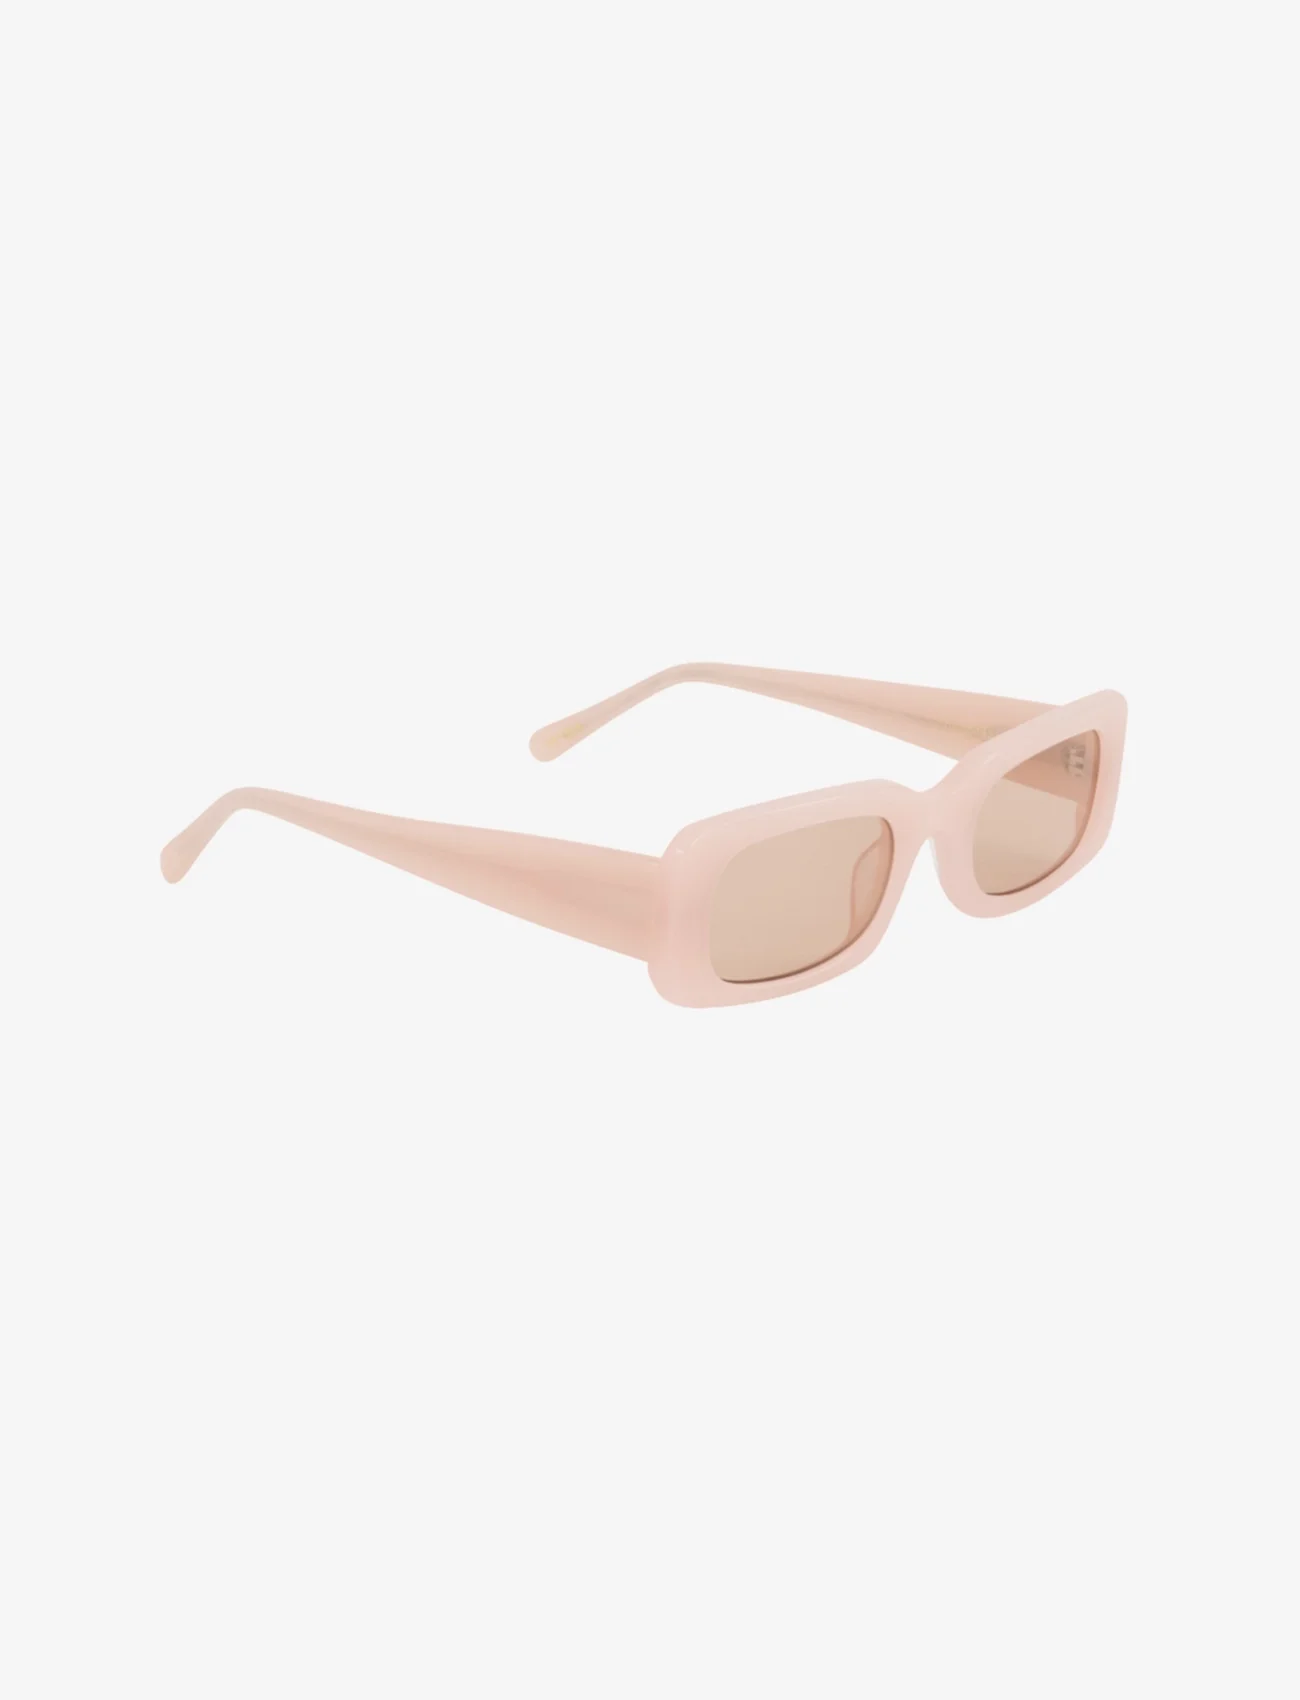 Corlin Eyewear - Sunset Cinnamon - okulary przeciwsłoneczne prostokątne - pink - 1